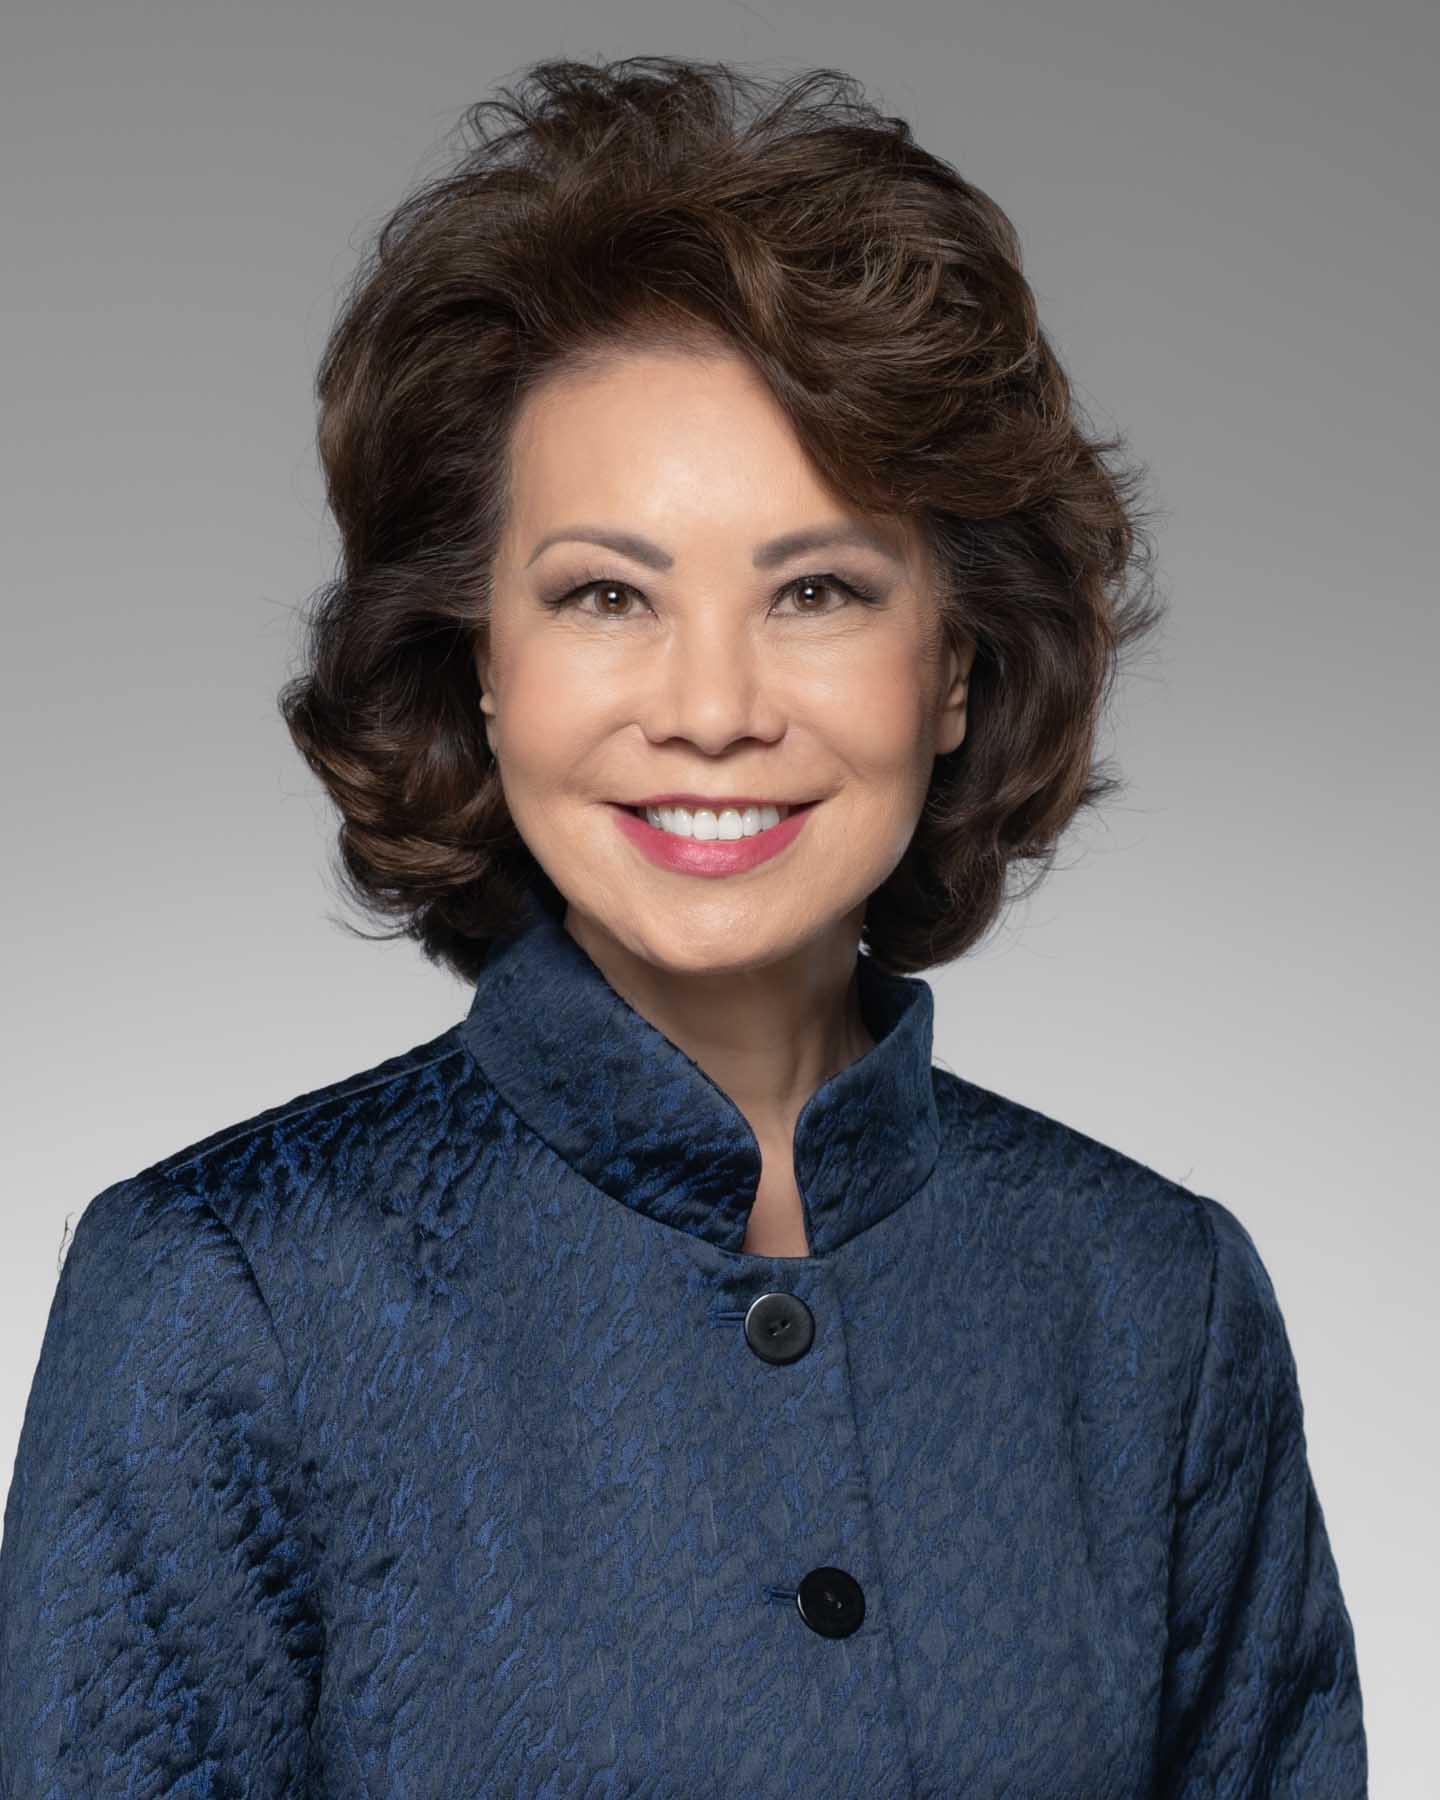 Secretary Elaine L Chao